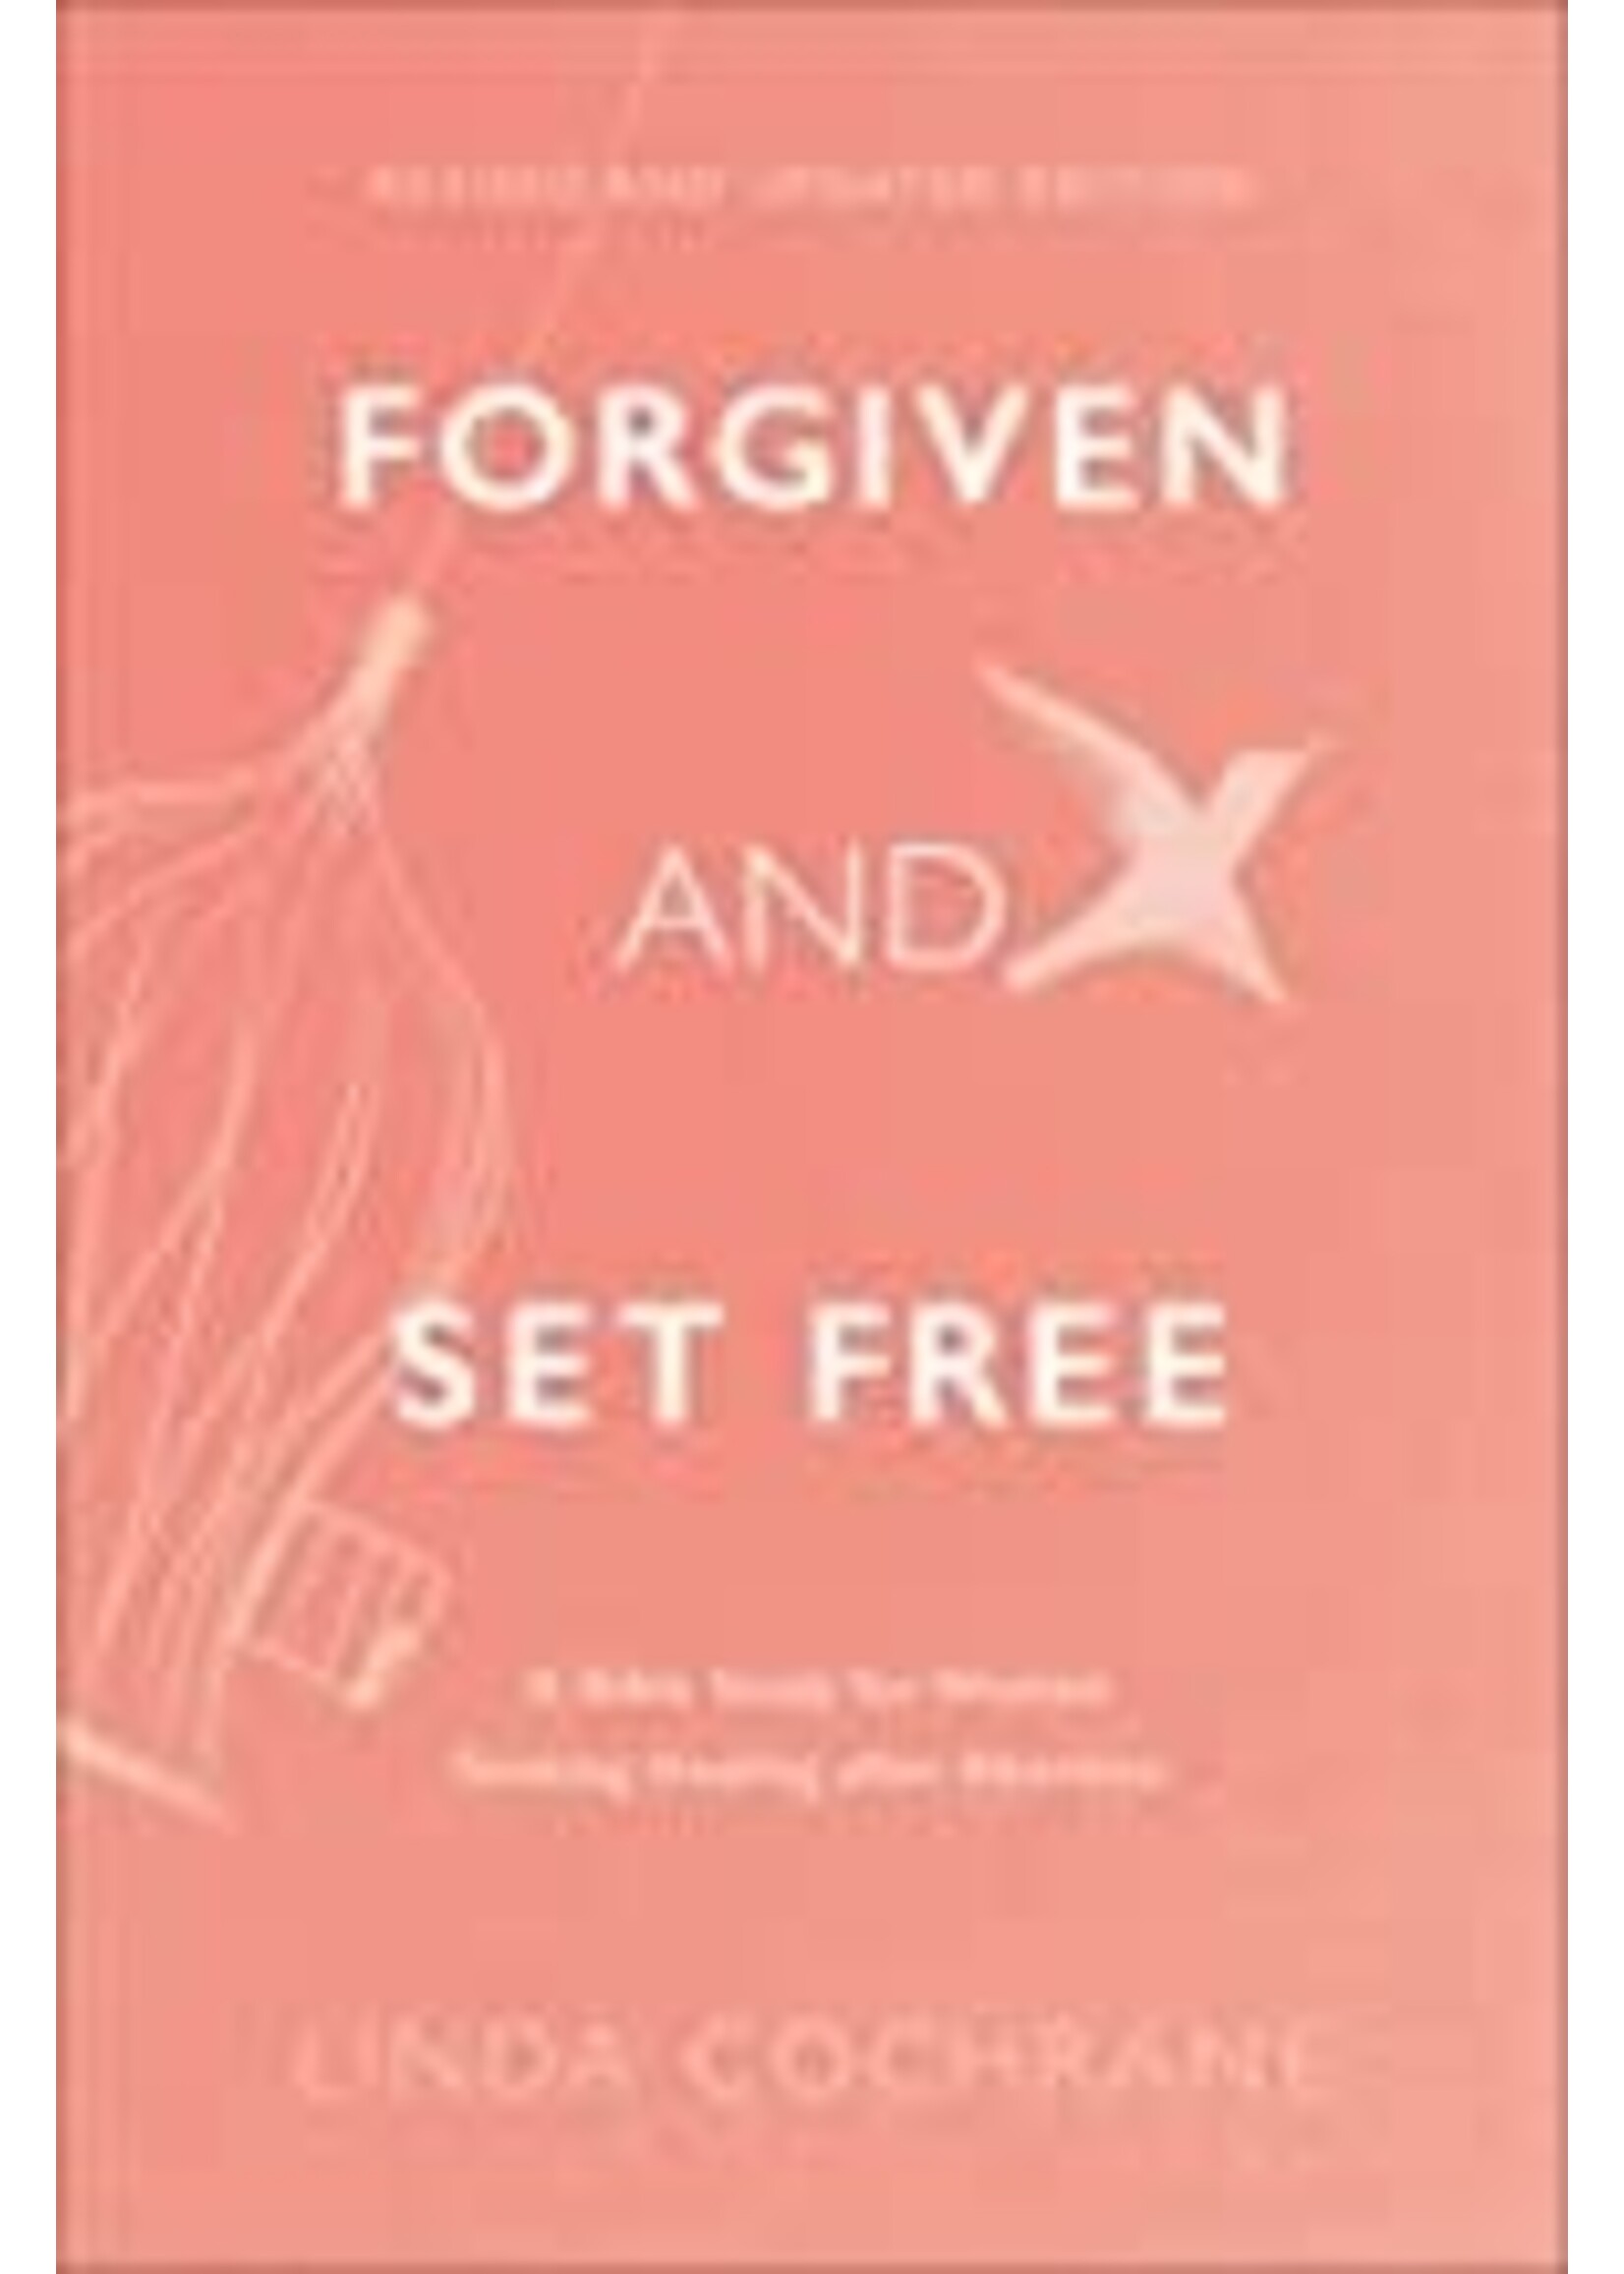 FORGIVEN AND SET FREE